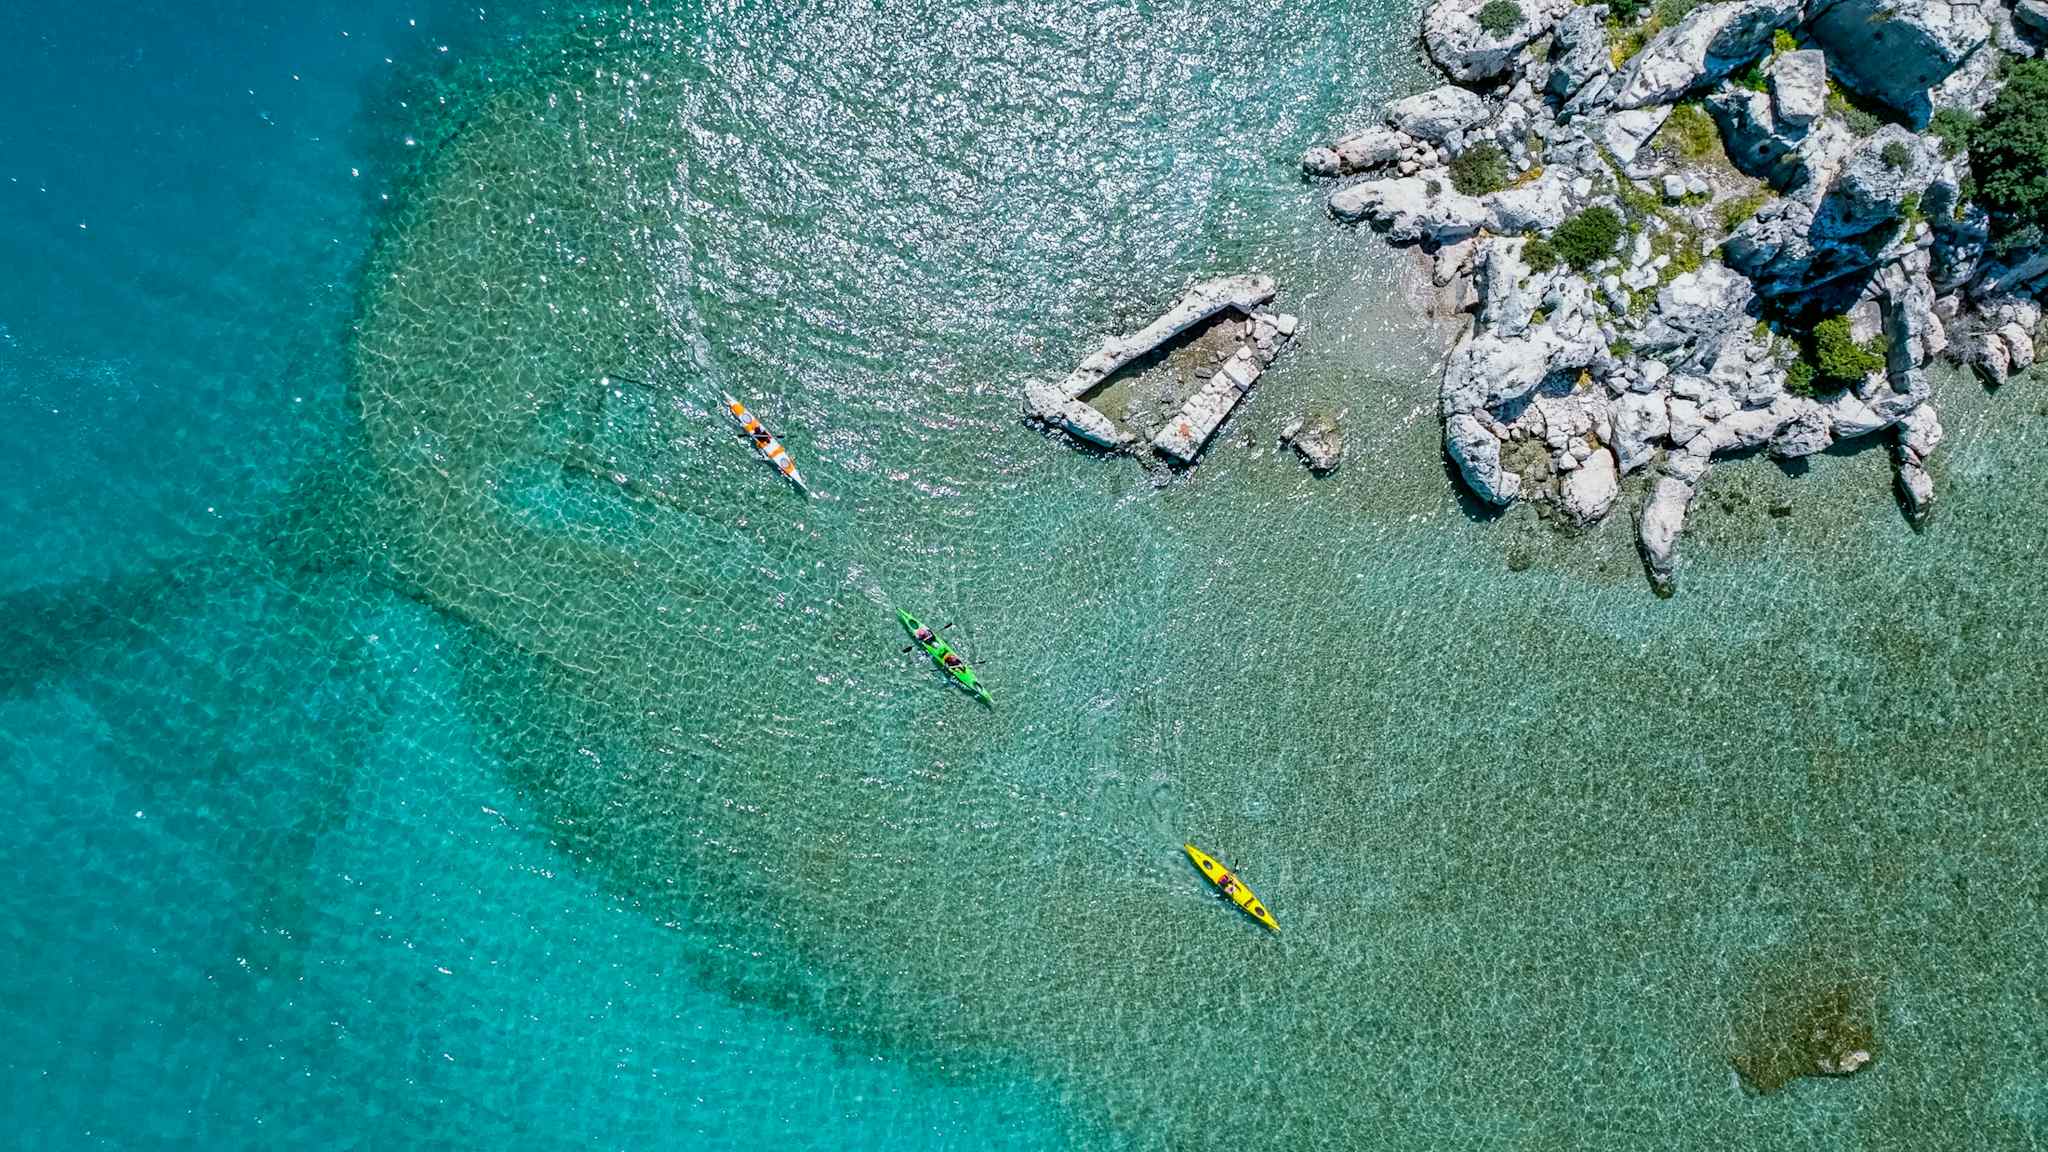 Aerial view - person canoeing in Antalya-Kaleköy
Getty # 1495646913